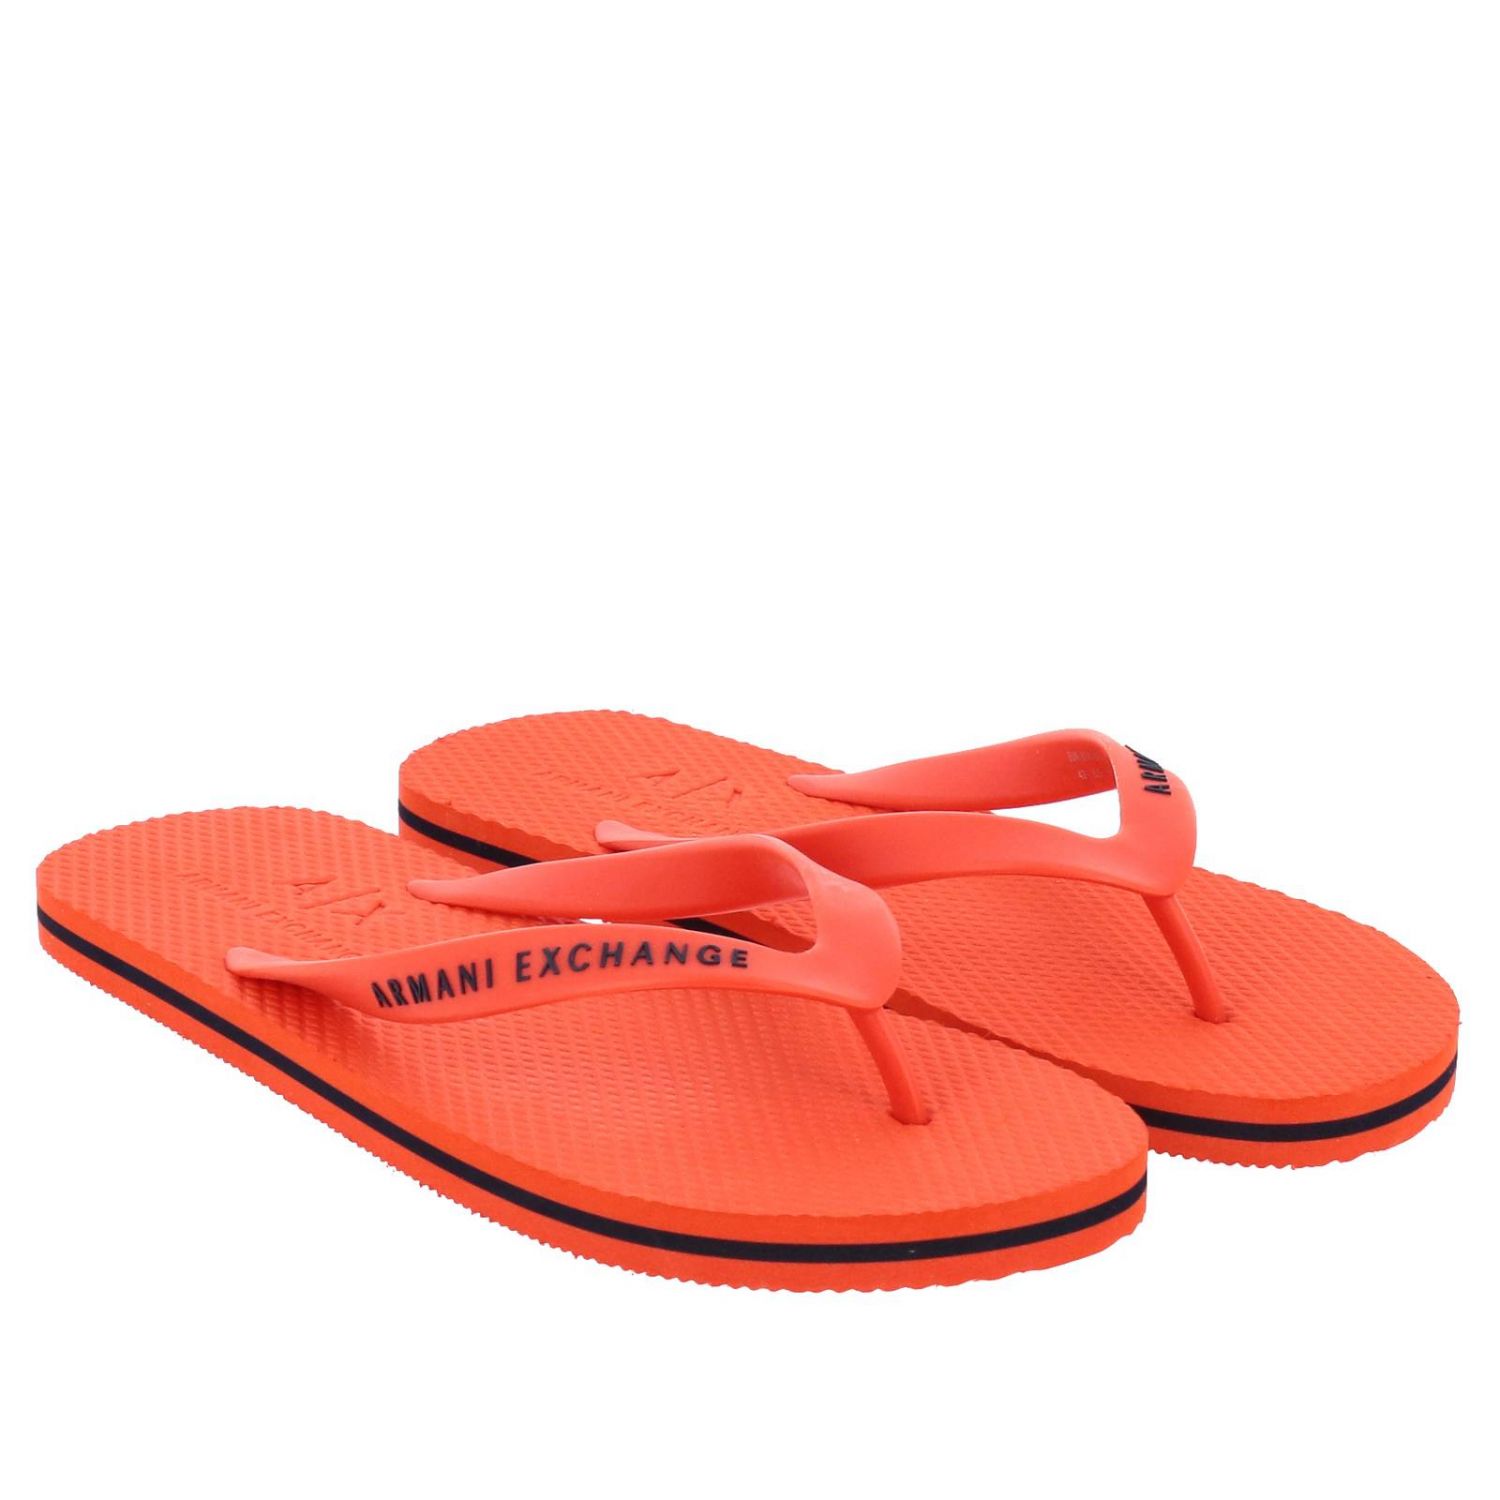 Armani Exchange Outlet: sandals for men - Orange | Armani Exchange ...